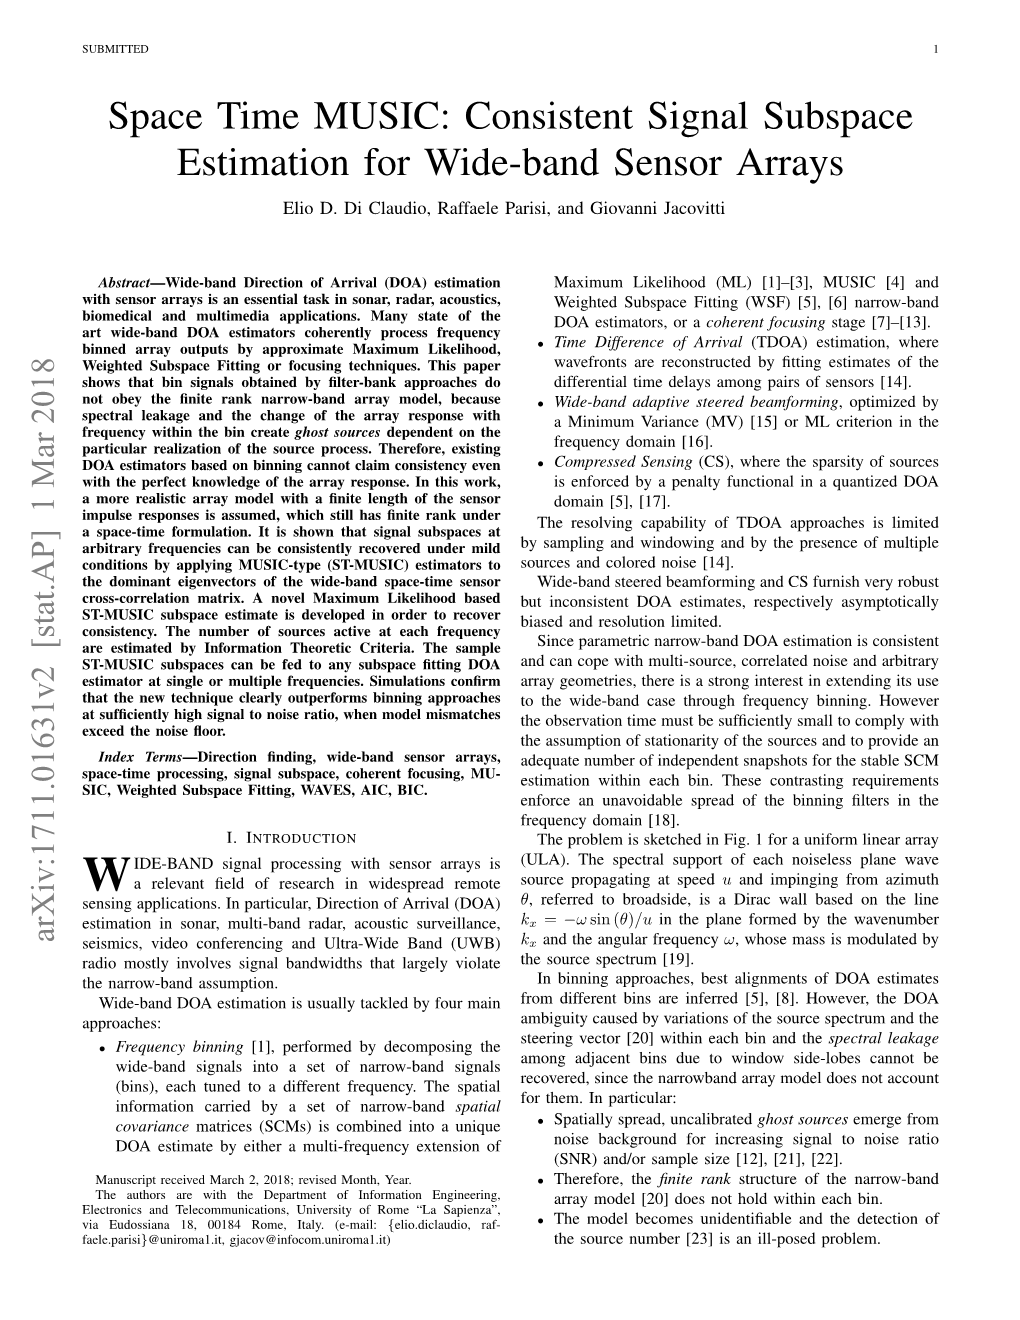 Consistent Signal Subspace Estimation for Wide-Band Sensor Arrays Elio D